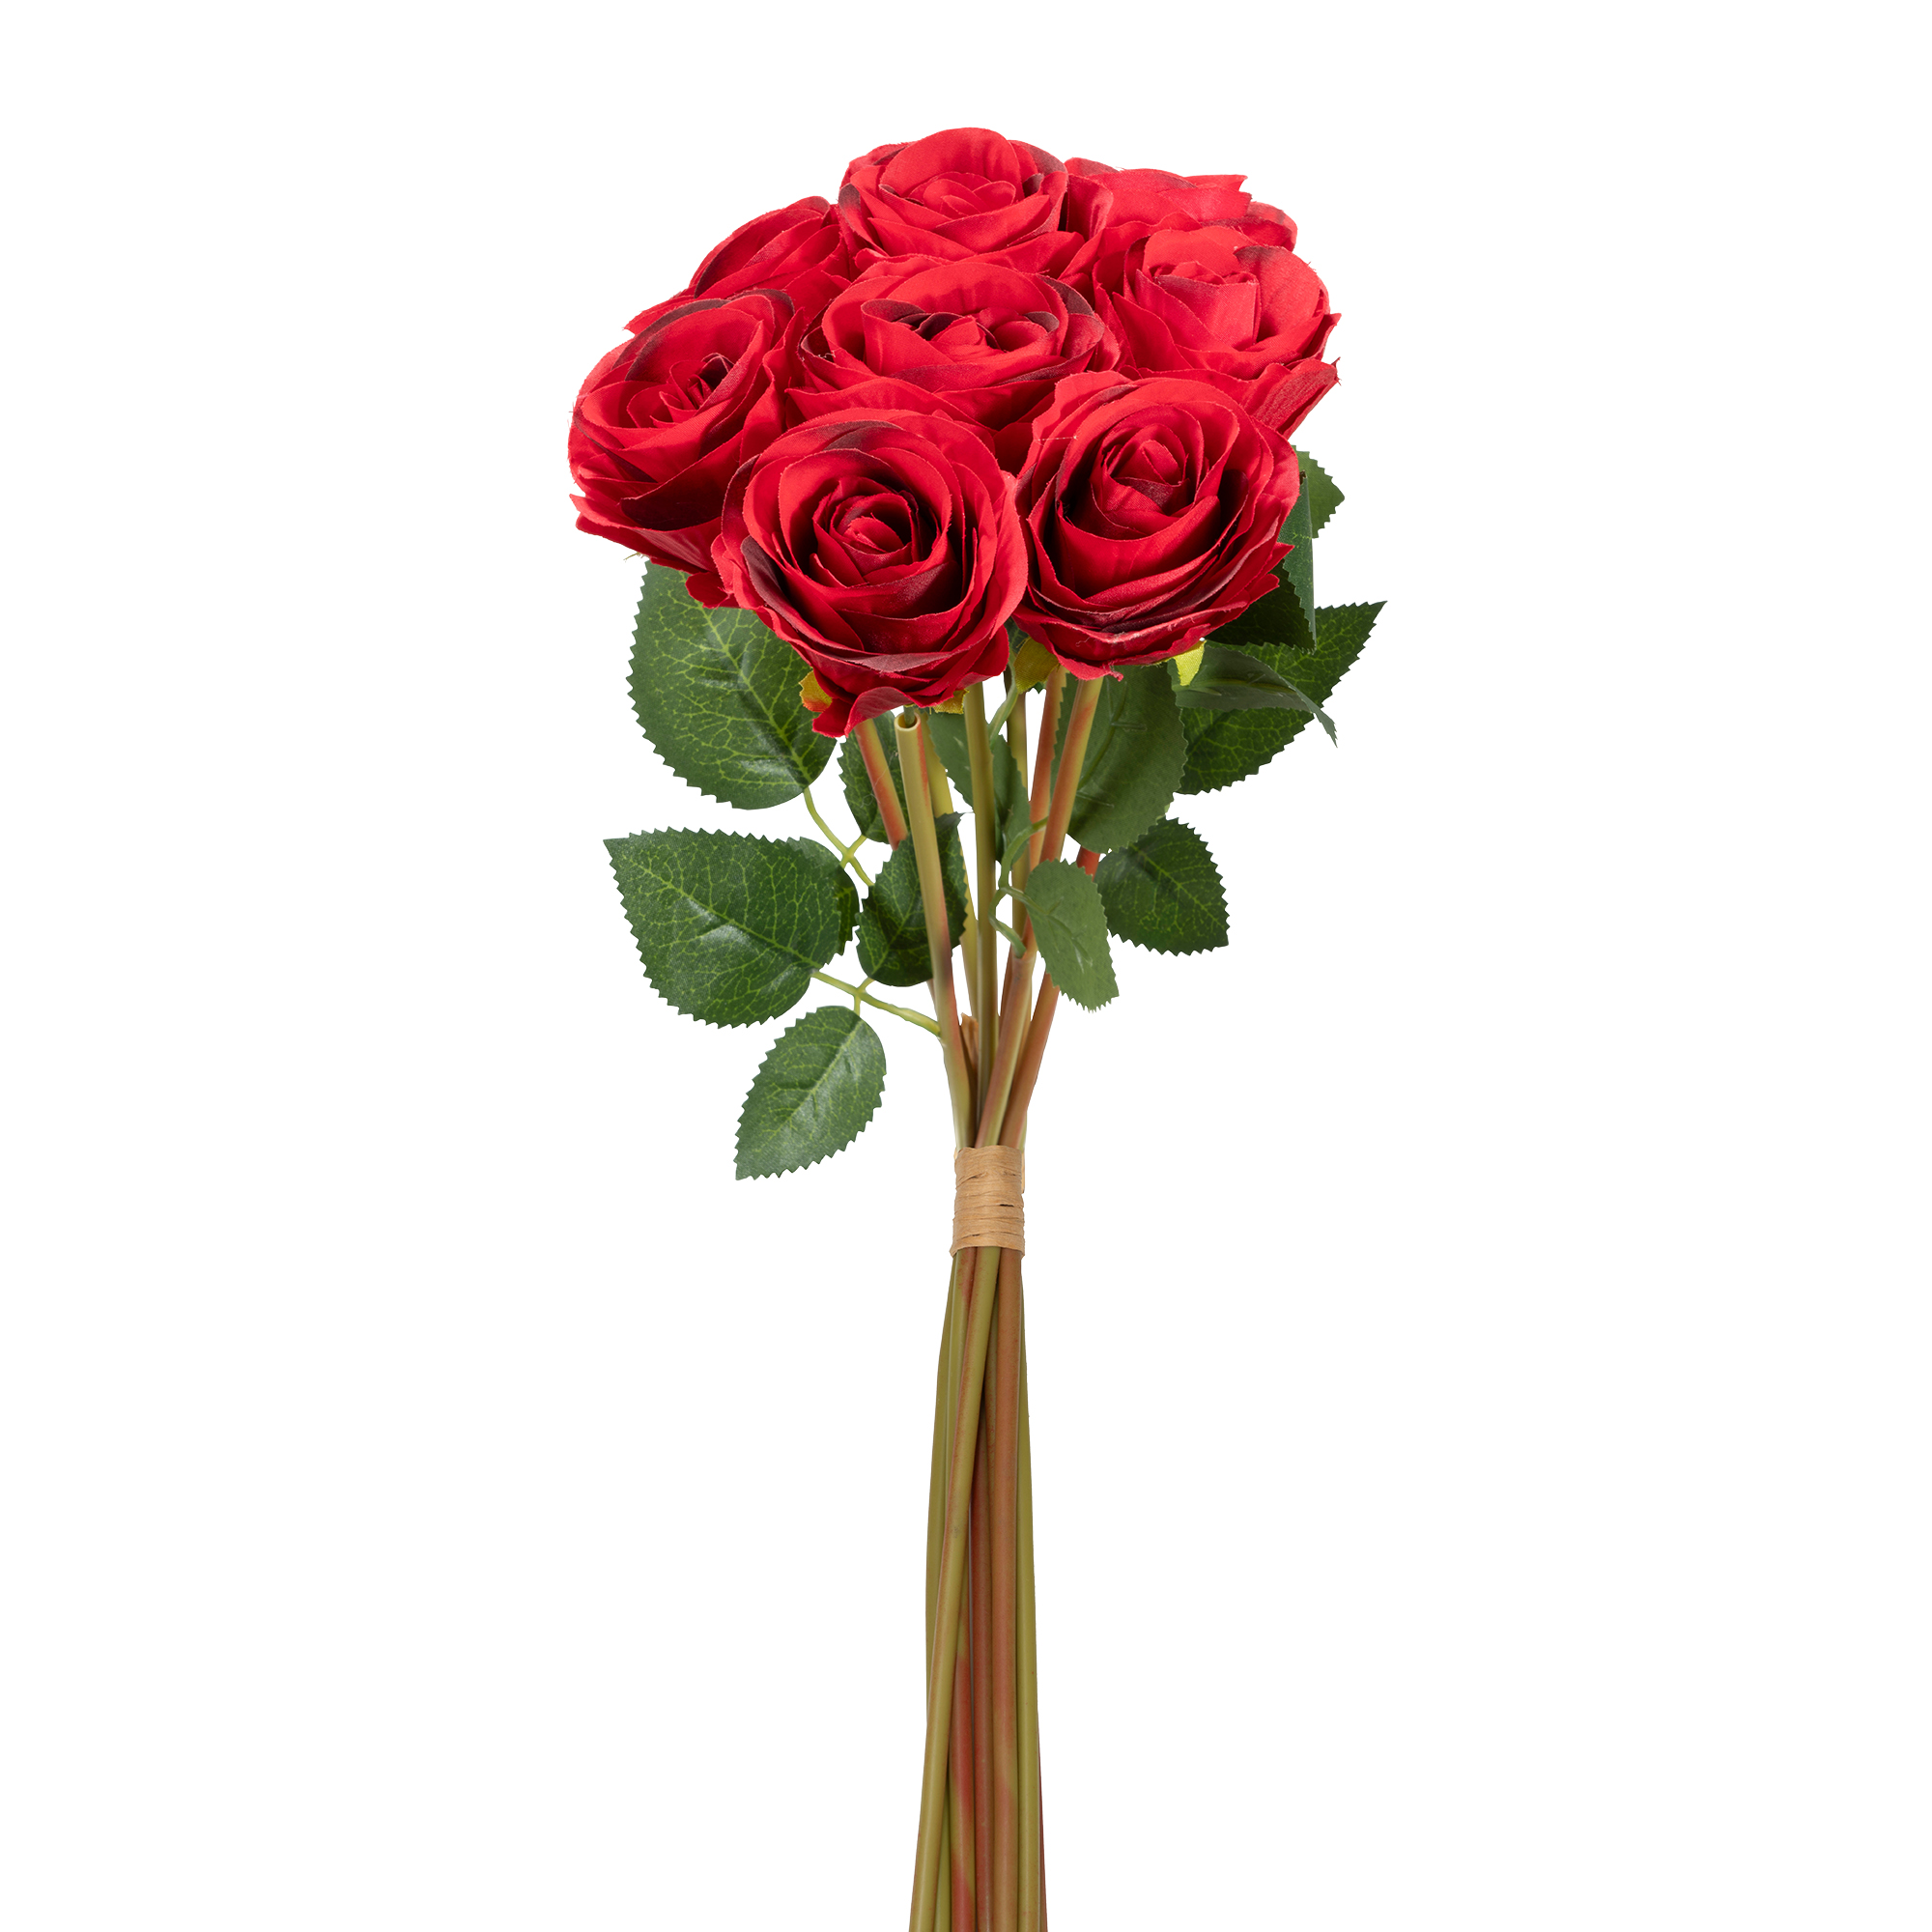 Artificial Rose Flower Bouquet - Red